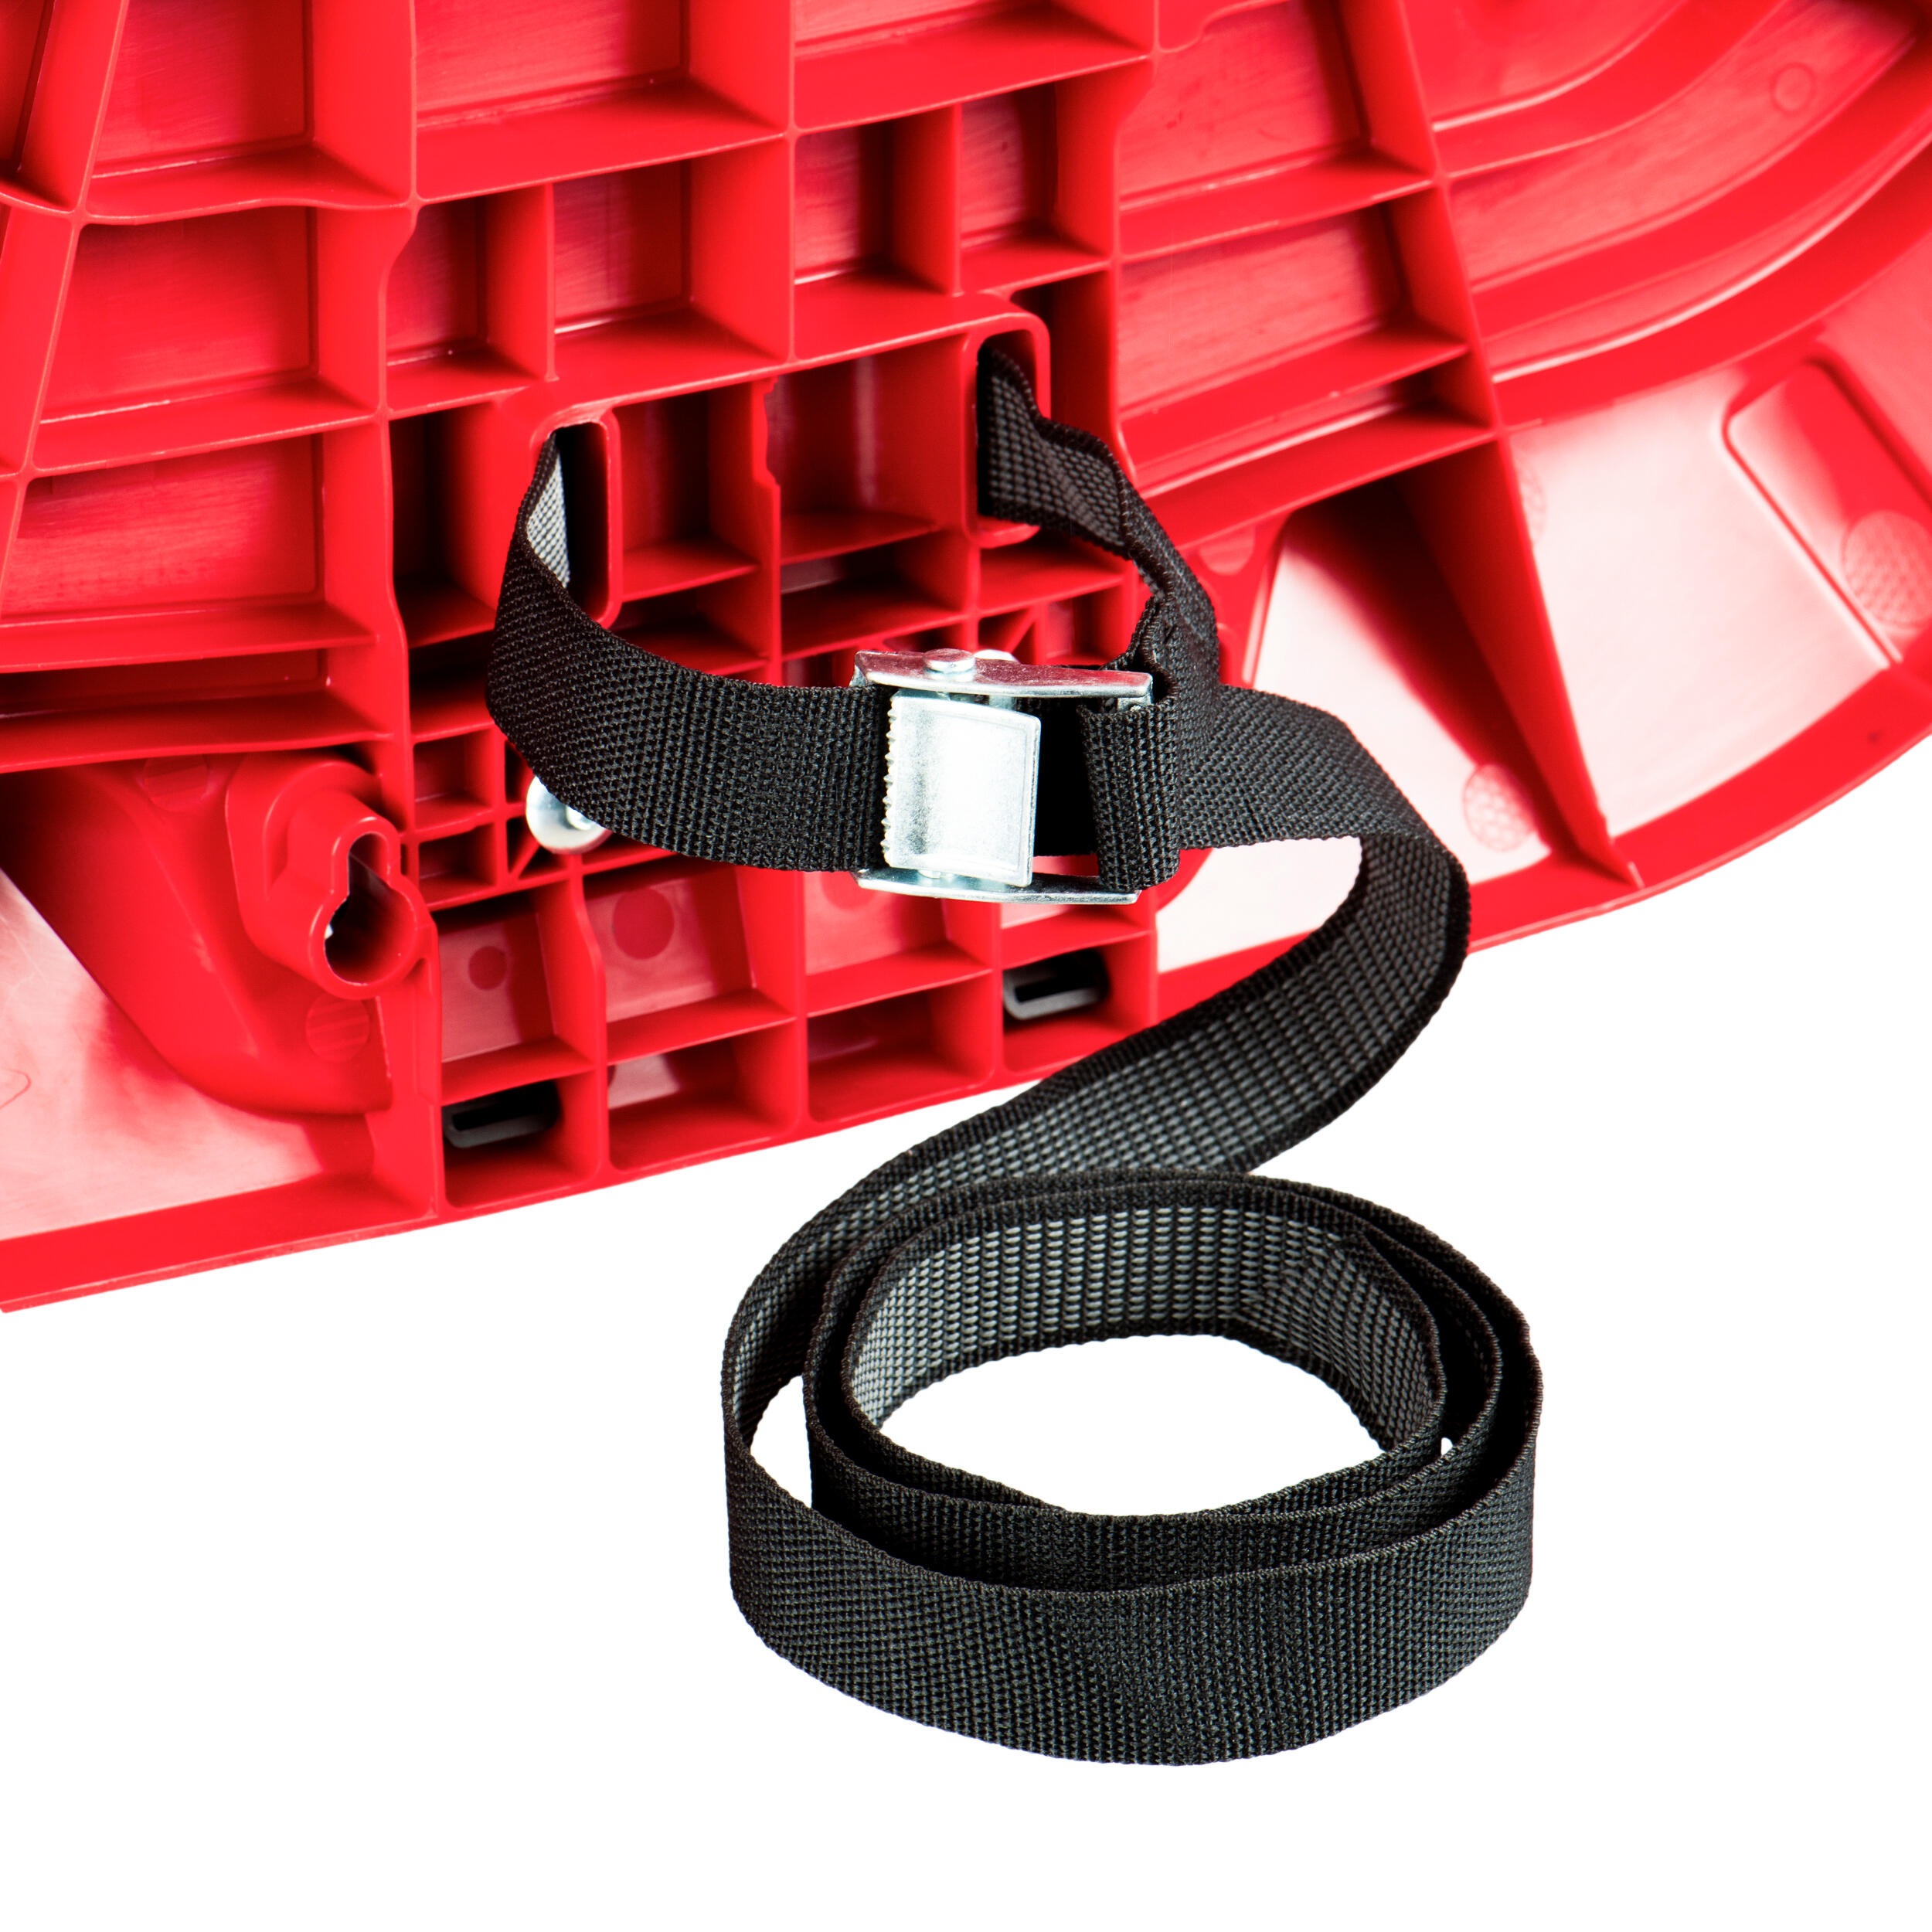 Wall-Mounted Transportable Basketball Hoop Set K900 - Red/Black 5/5